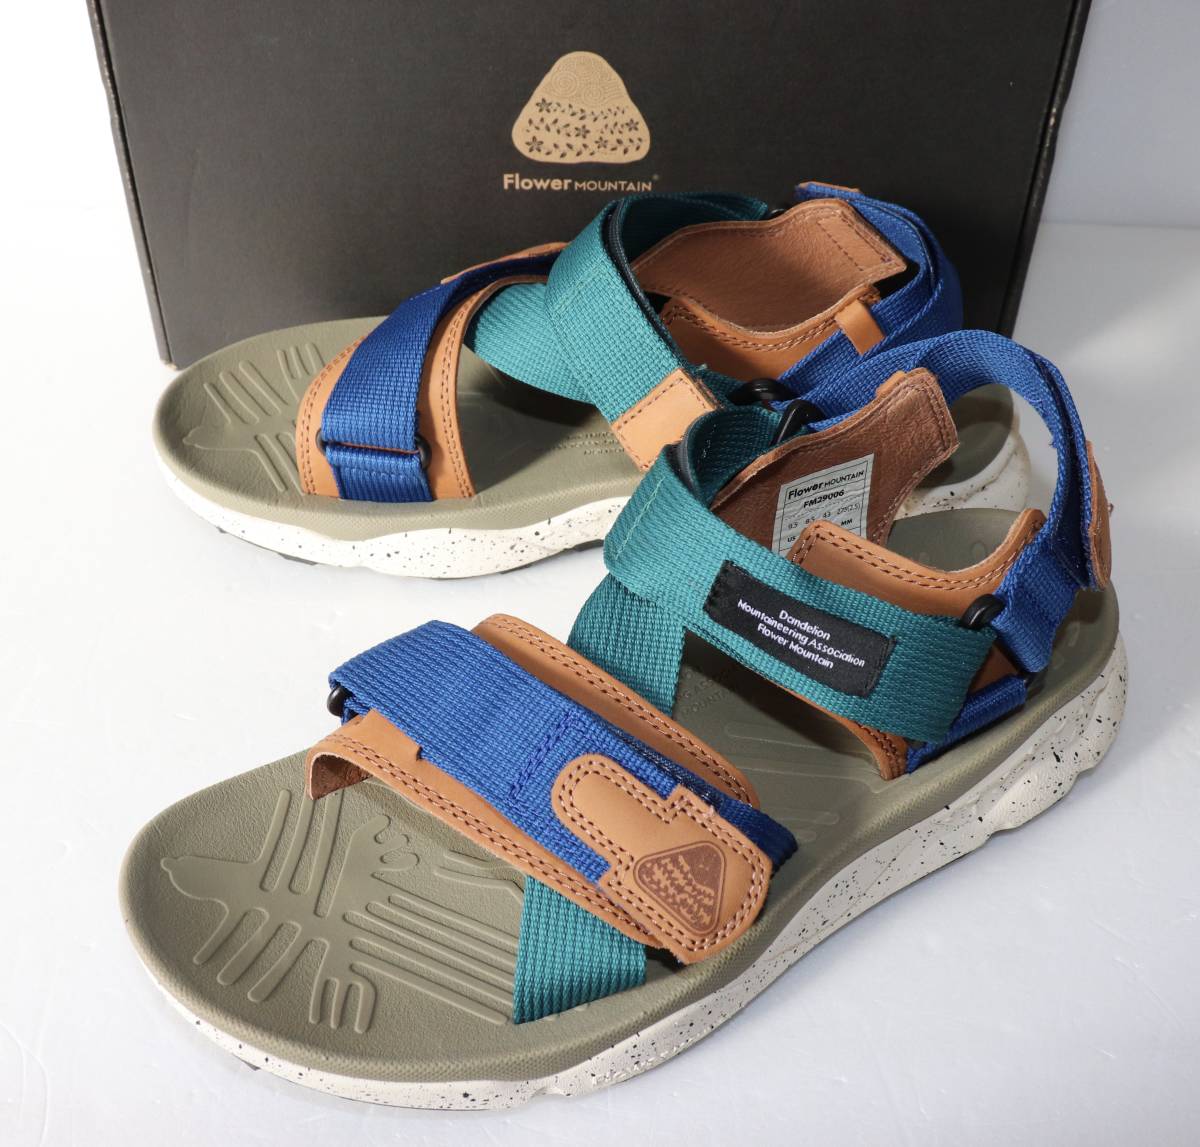  regular price 13000 new goods genuine article FlowerMOUNTAIN sandals FM29006 flower mountain 28.5049 0